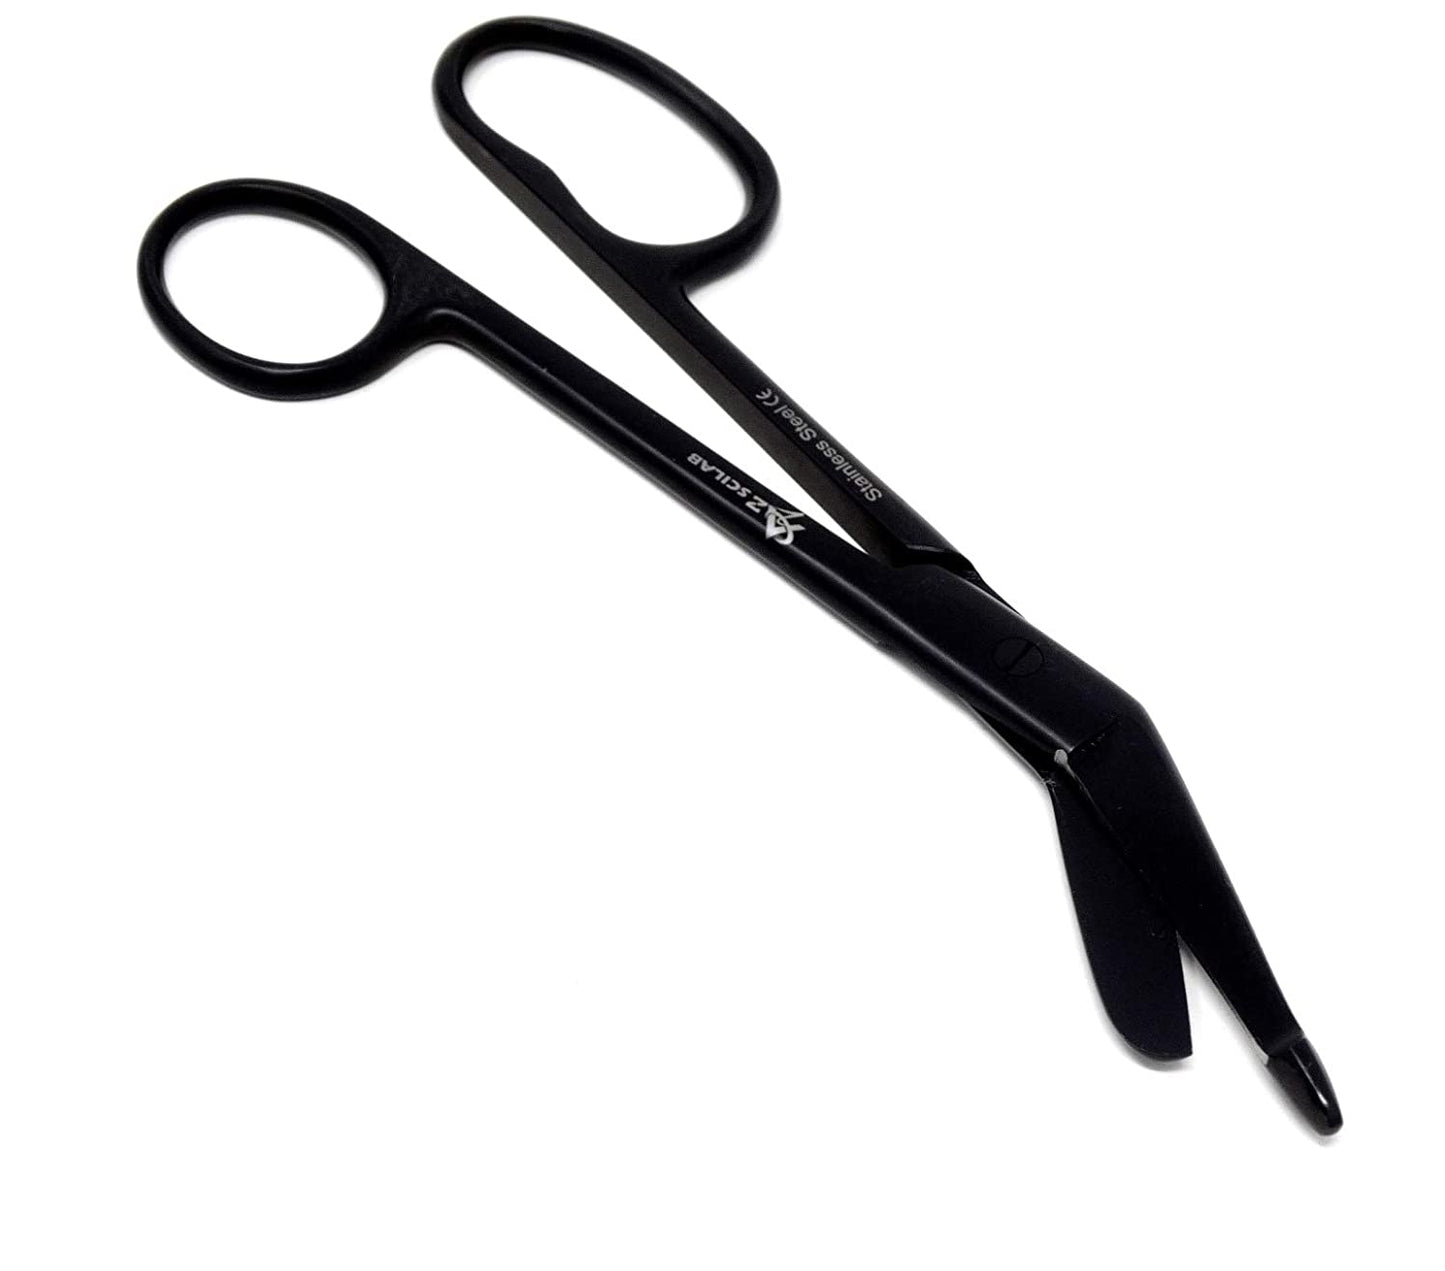 All Black One Large Ring Lister Bandage Scissors 7.25" Stainless Steel